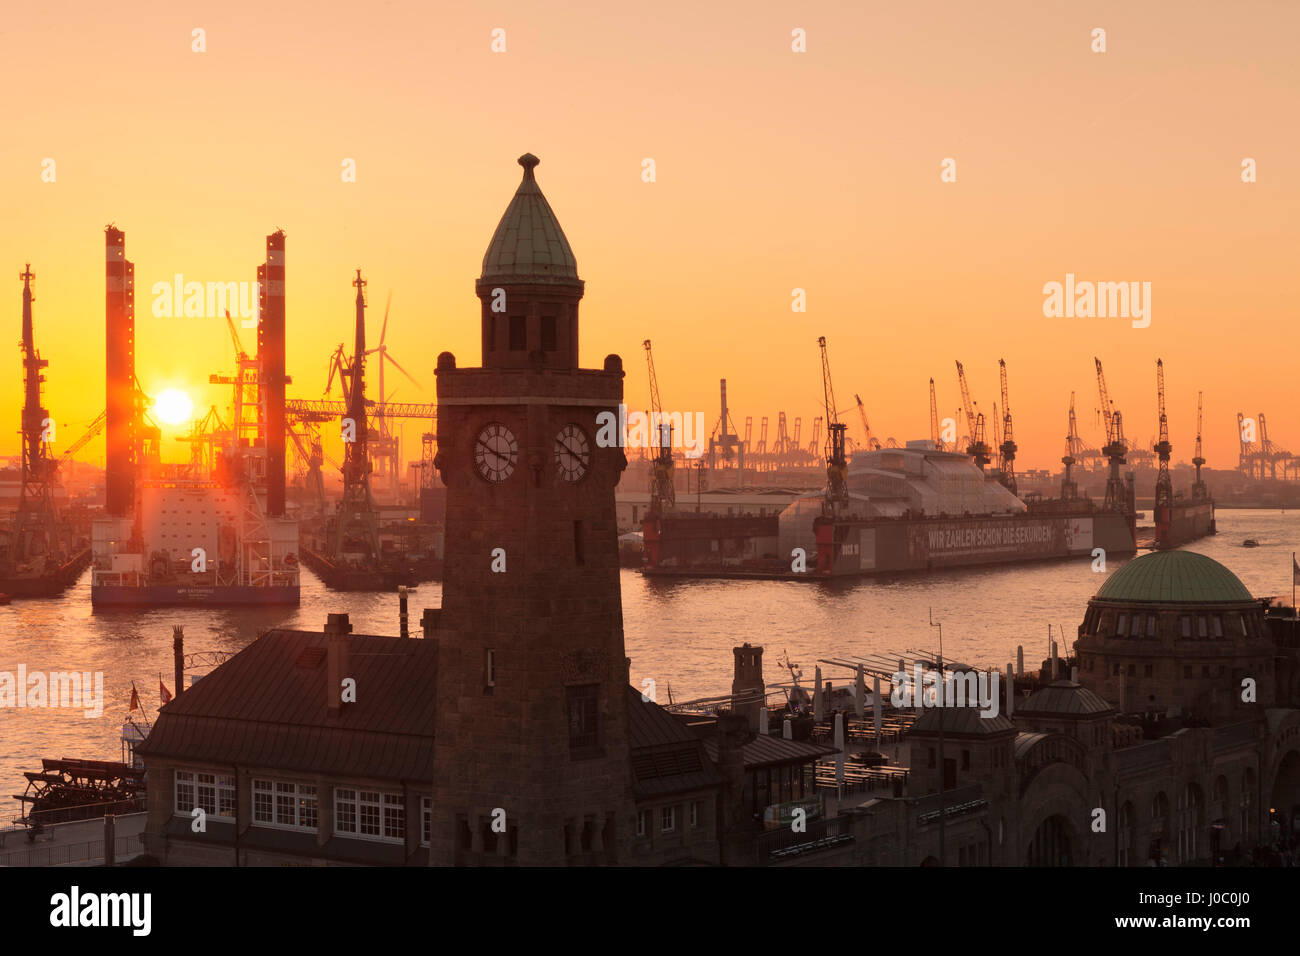 St. Pauli Landungsbruecken pier against harbour at sunset, Hamburg, Hanseatic City, Germany Stock Photo